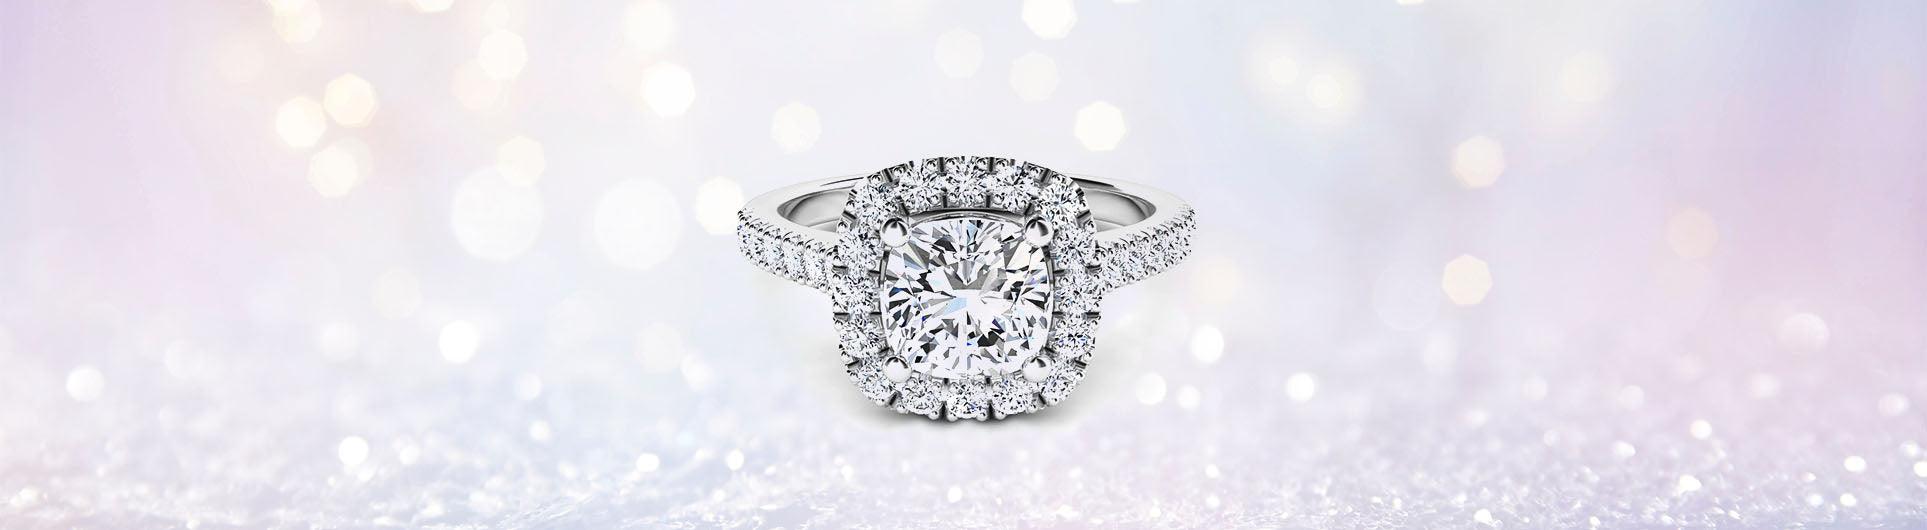 The 'Monroe Yorke Diamonds' Guide to Your Perfect Engagement Ring - Monroe Yorke Diamonds